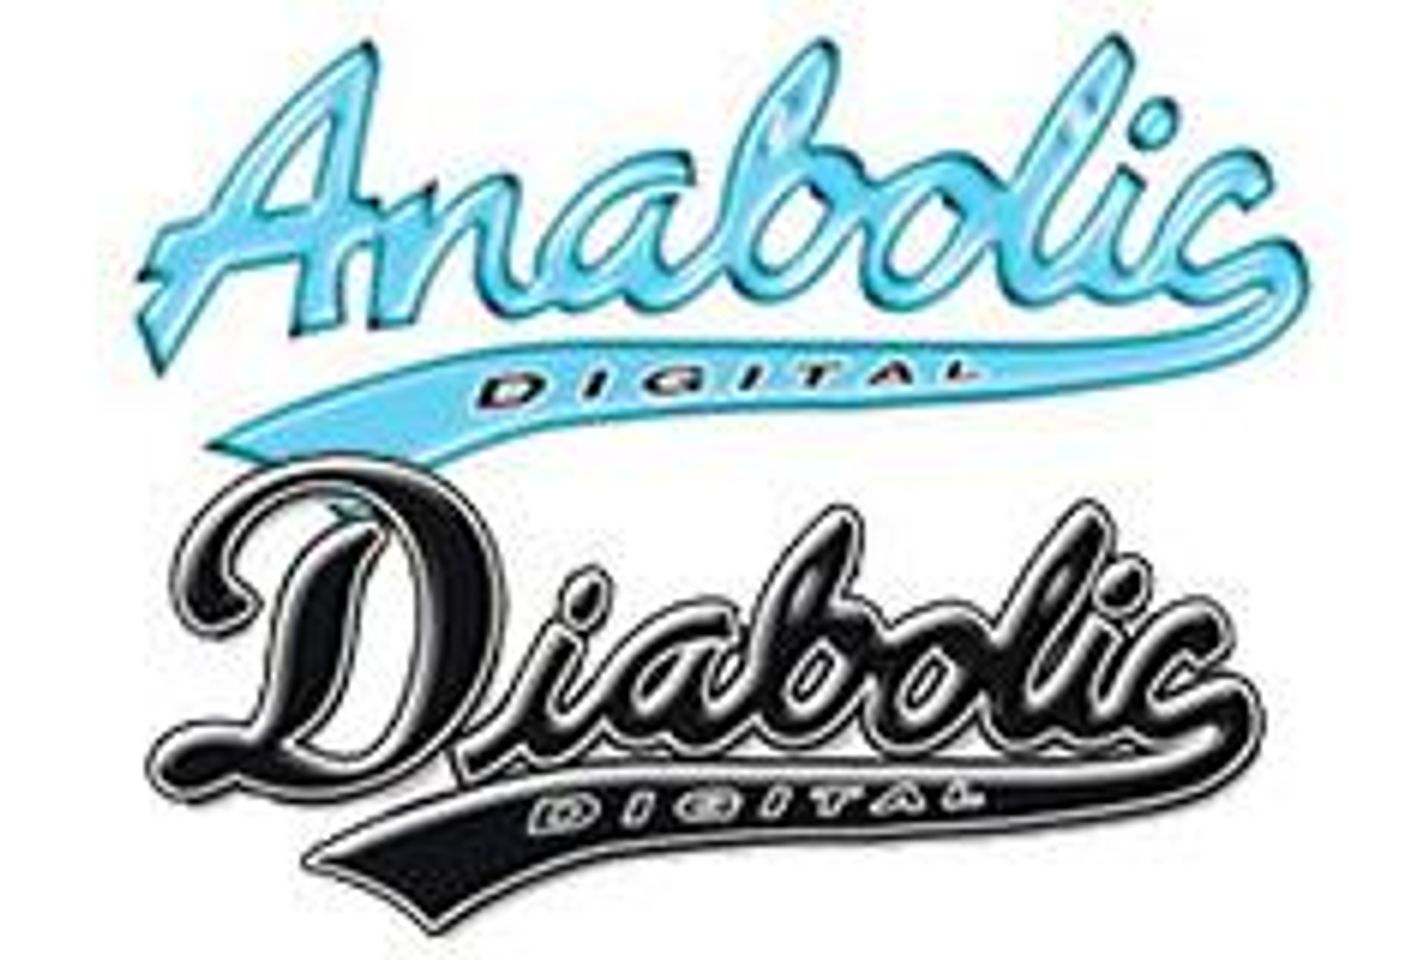 Diabolic's Gregg Alan Resigns at Anabolic